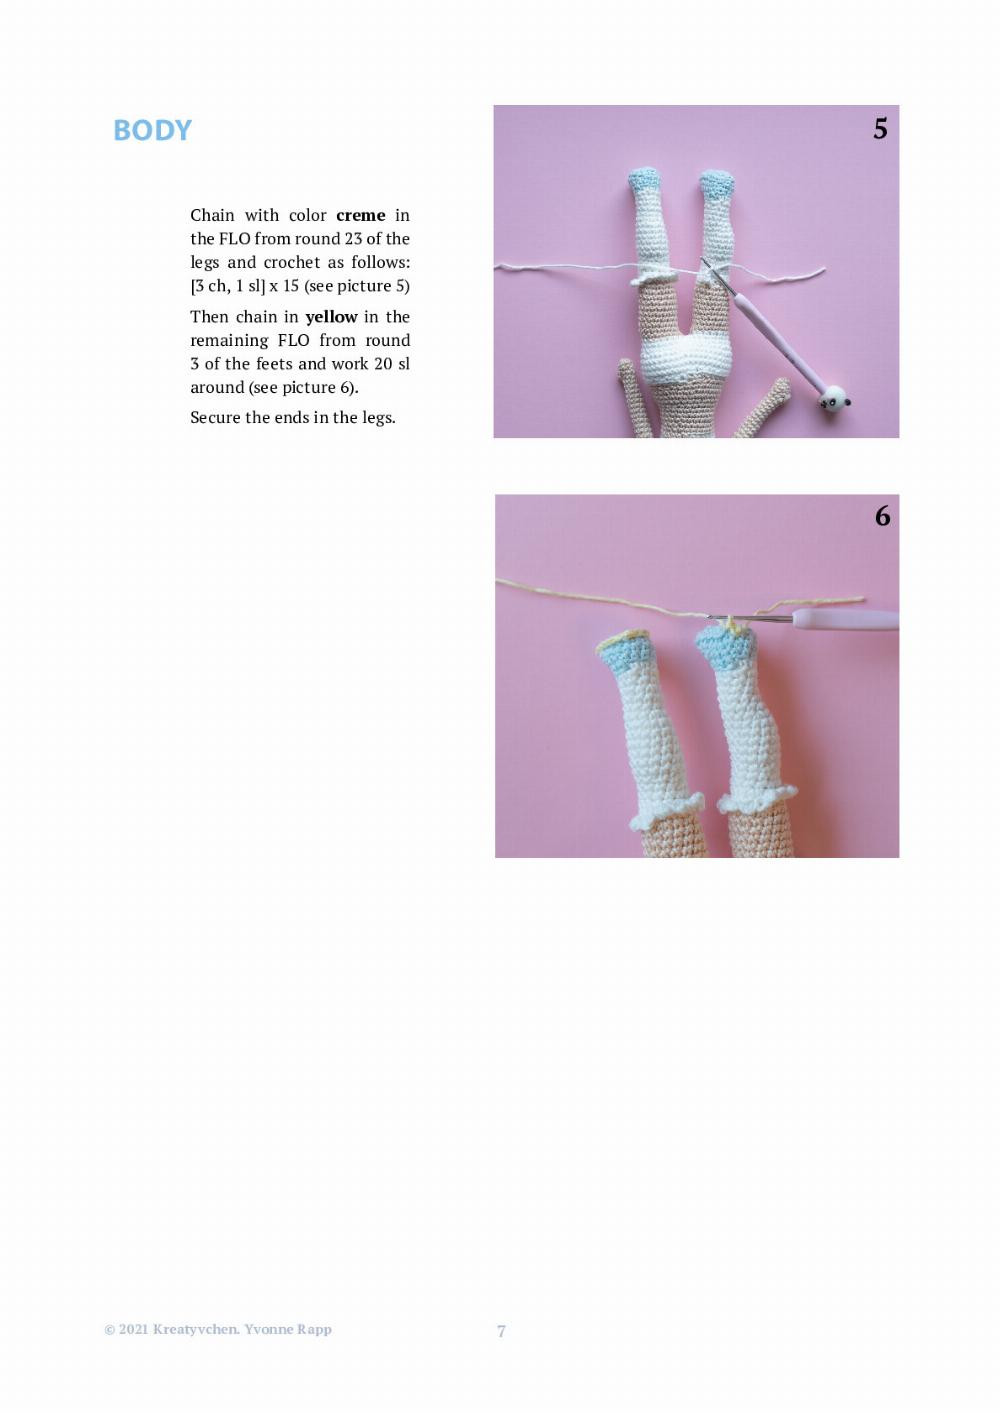 Marsha & Unicorn crochet pattern